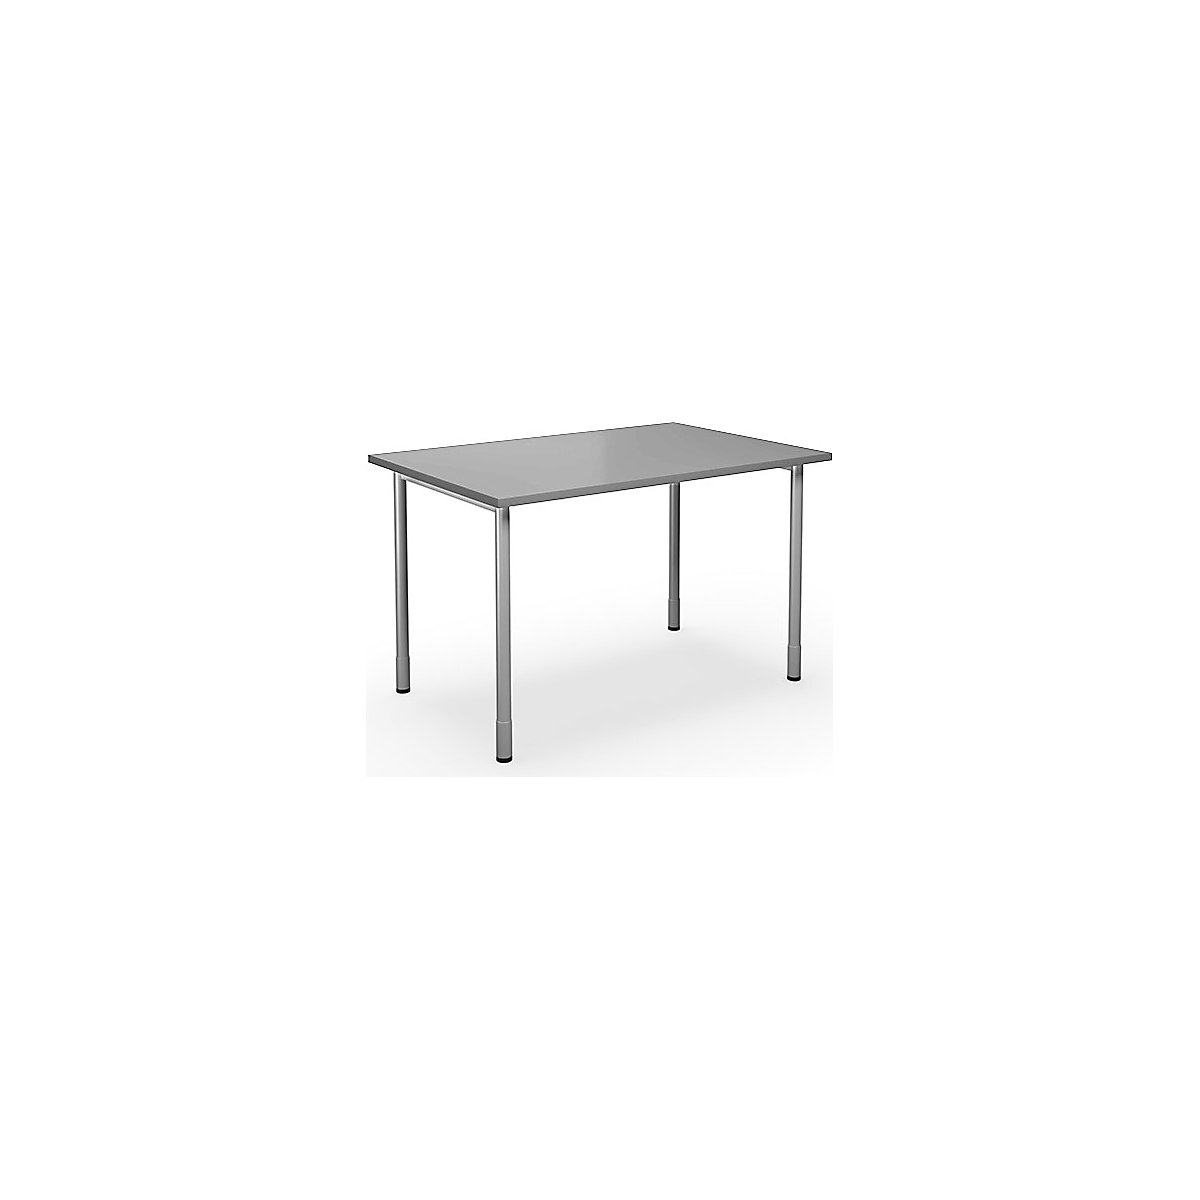 DUO-C multi-purpose desk, straight tabletop, WxD 1200 x 800 mm, light grey, silver-12